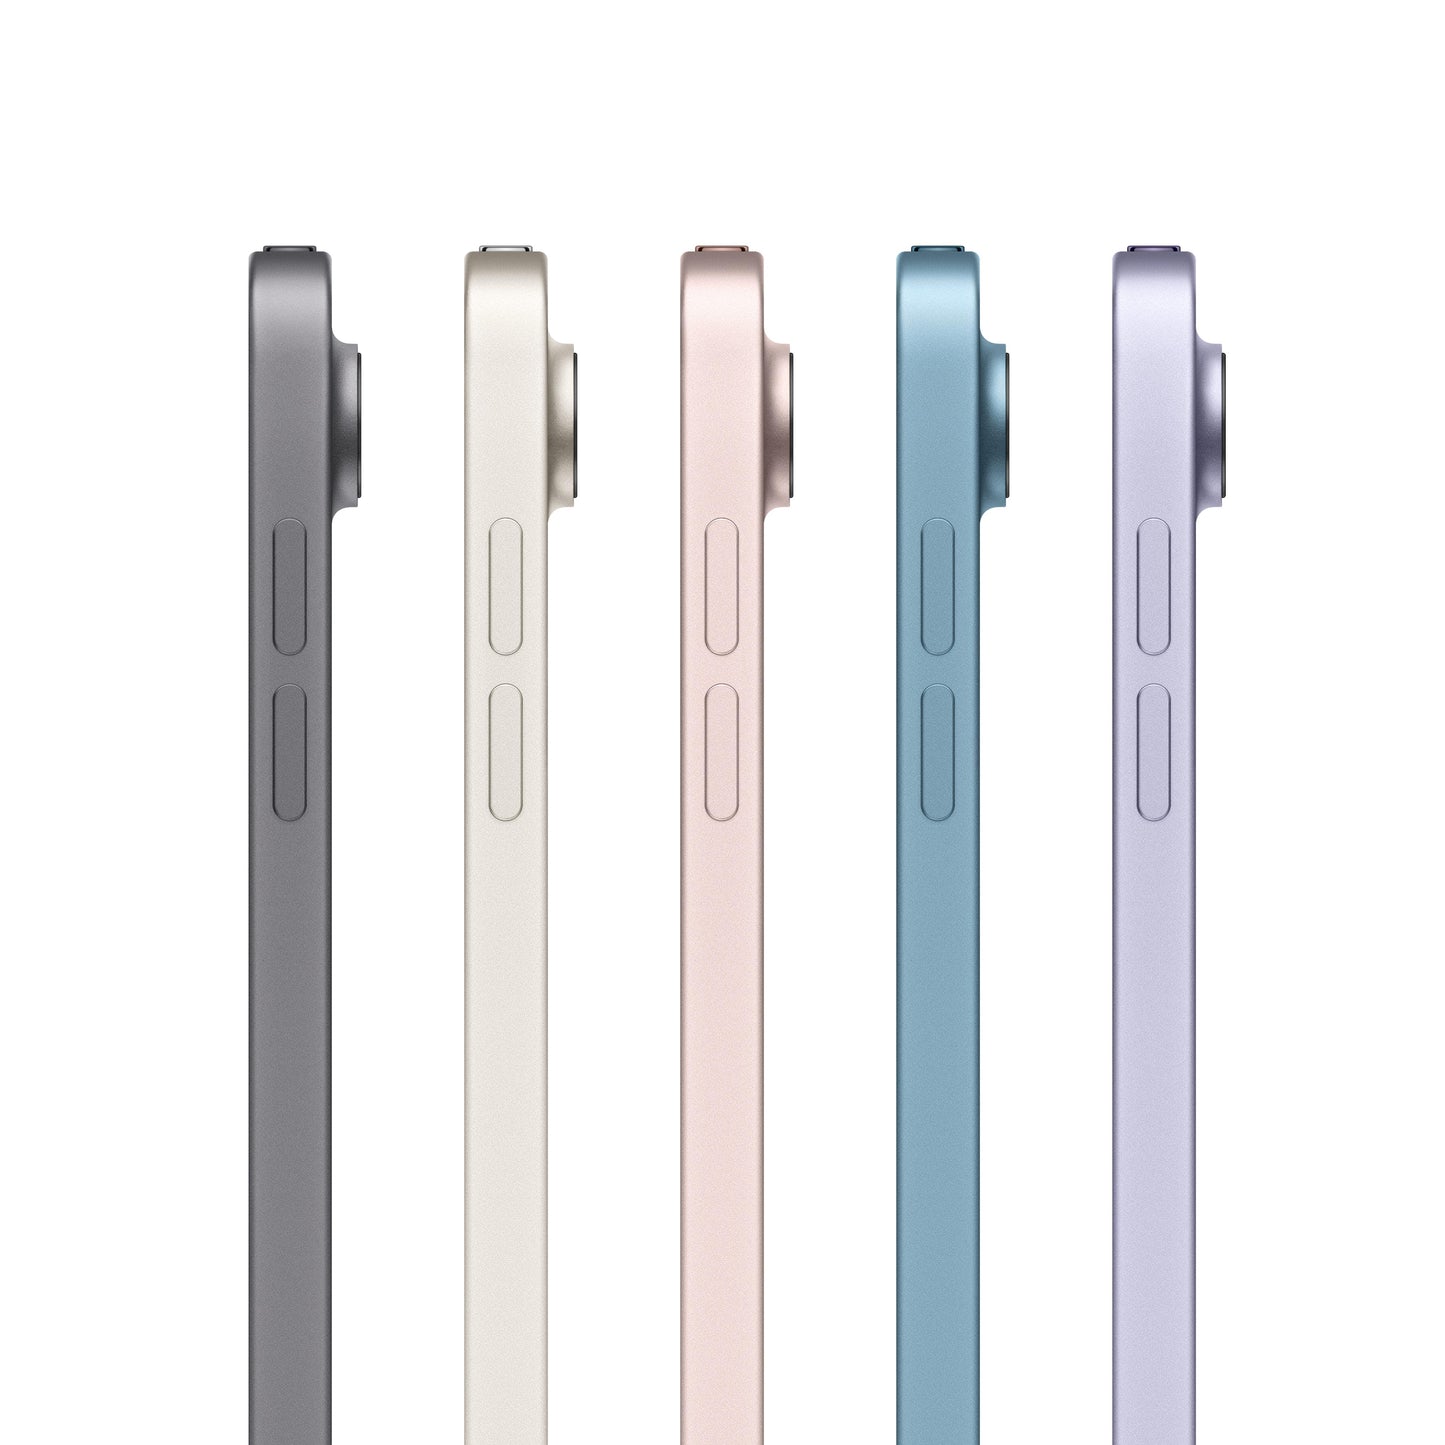 10.9-inch iPad Air Wi-Fi 256GB - Space Grey